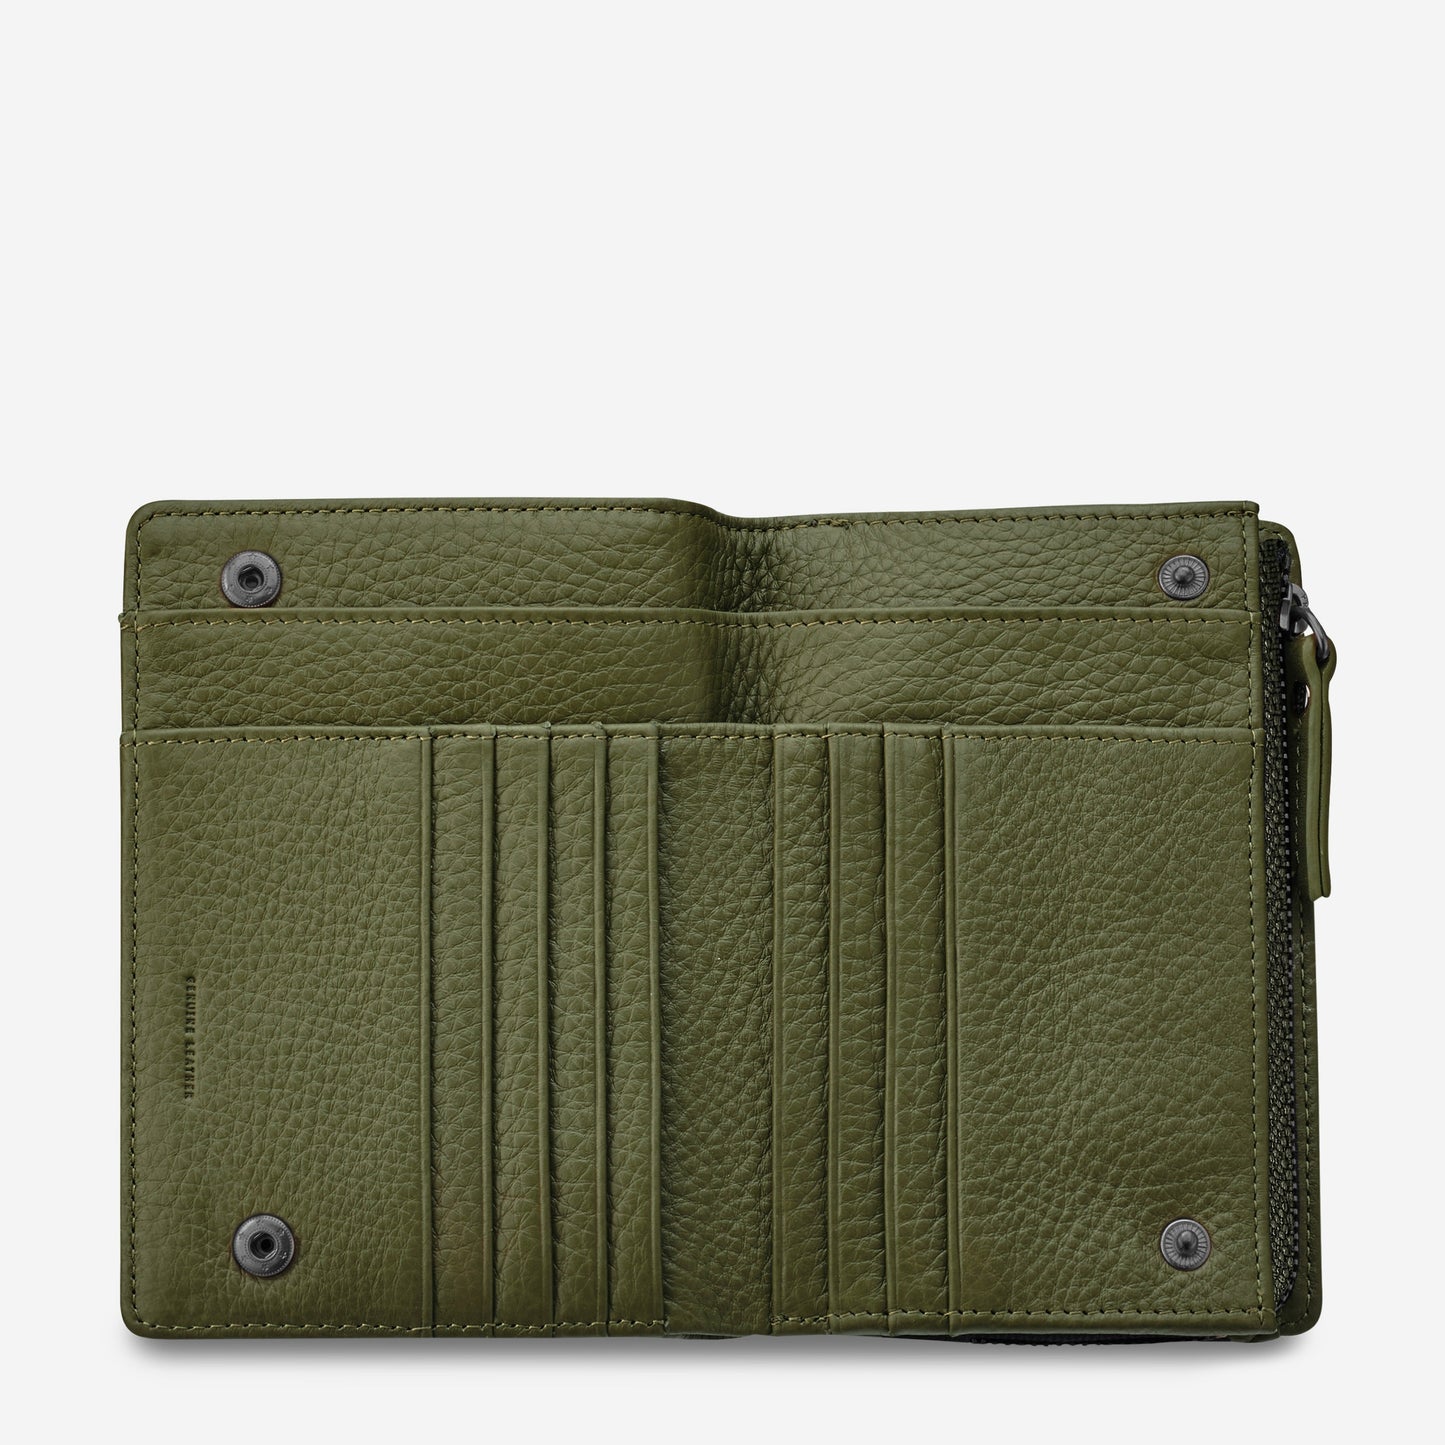 Insurgency Leather Wallet - Khaki